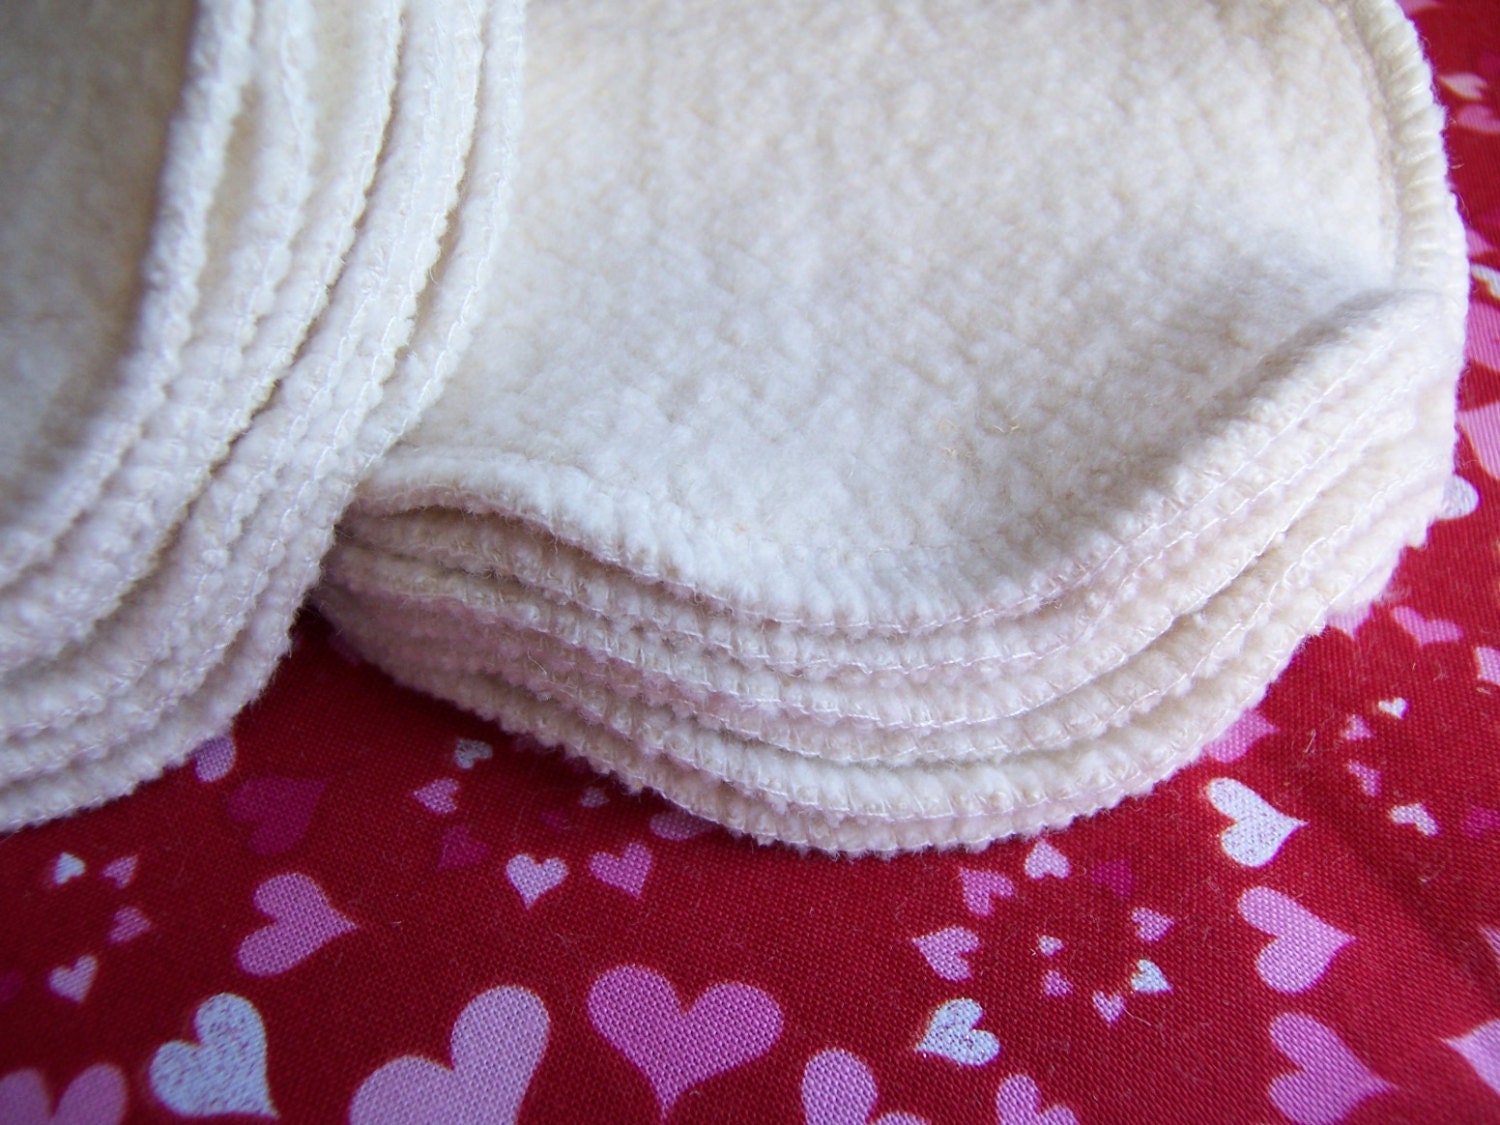  Engel Breast Pads (4) Merino Wool Silk Nursing Feeding Organic  Washable Reusable (1) : Baby